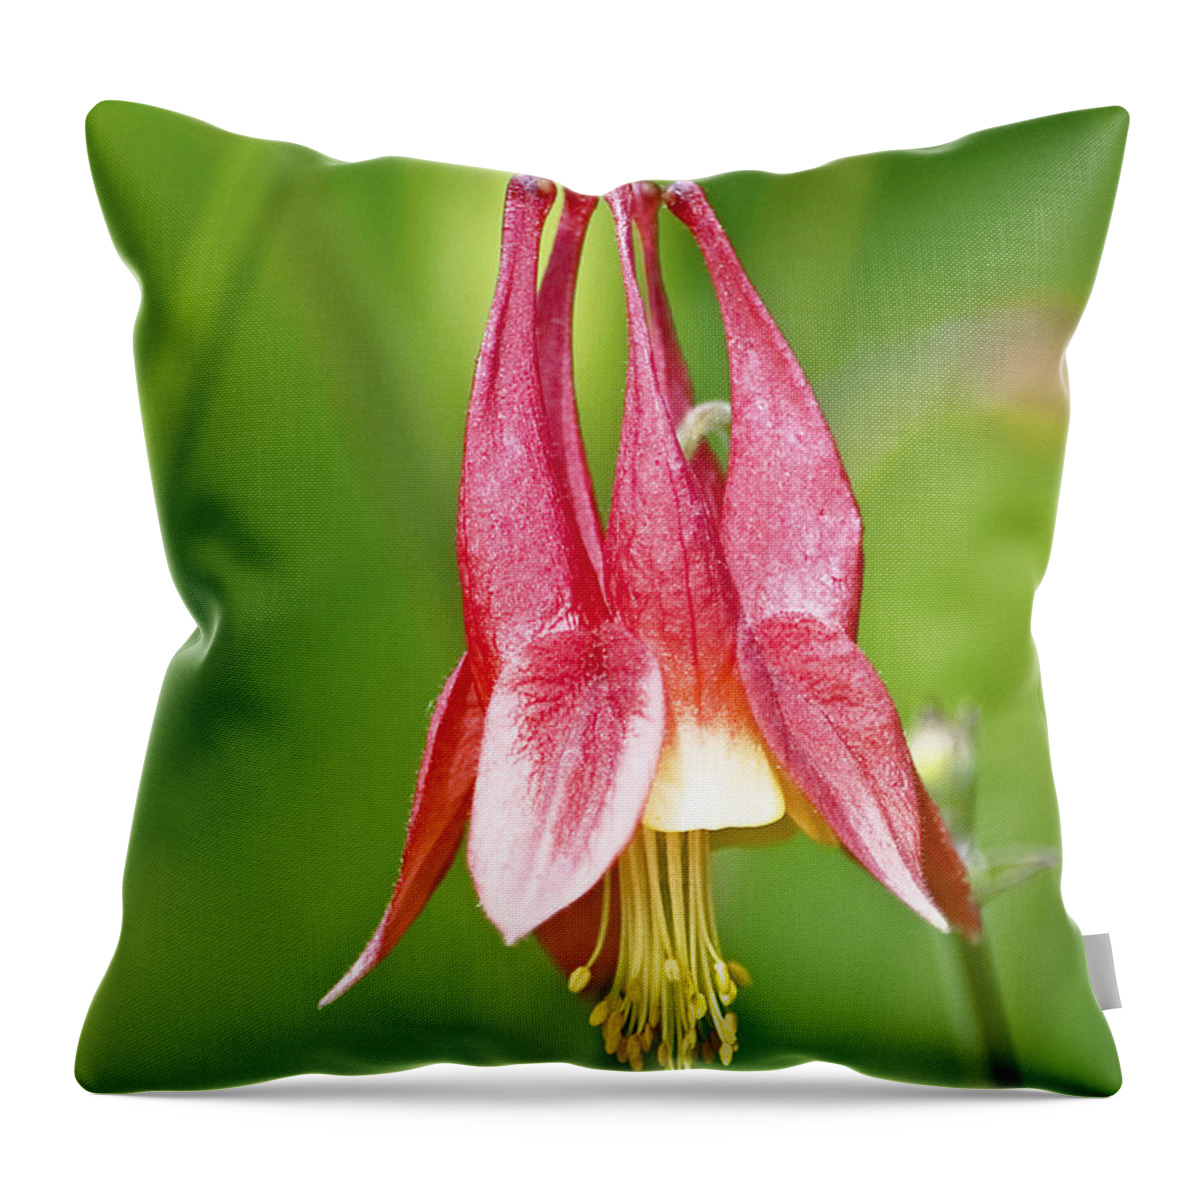 Wildflower Throw Pillow featuring the photograph Wild Columbine Flower by A Macarthur Gurmankin